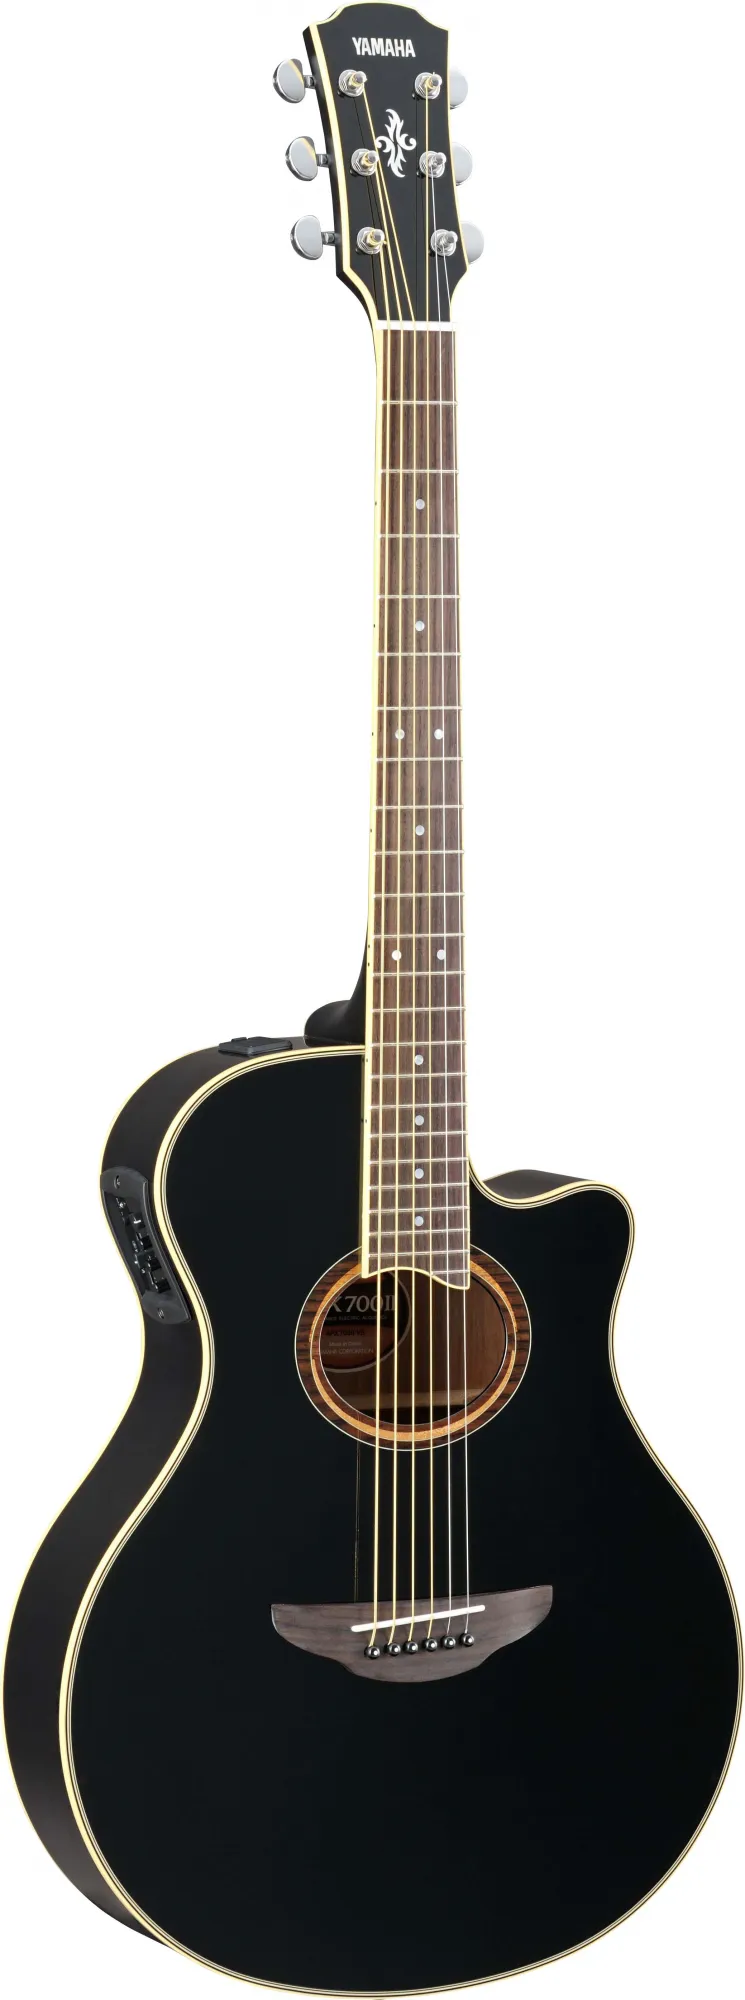 APX700II Black Westerngitarre